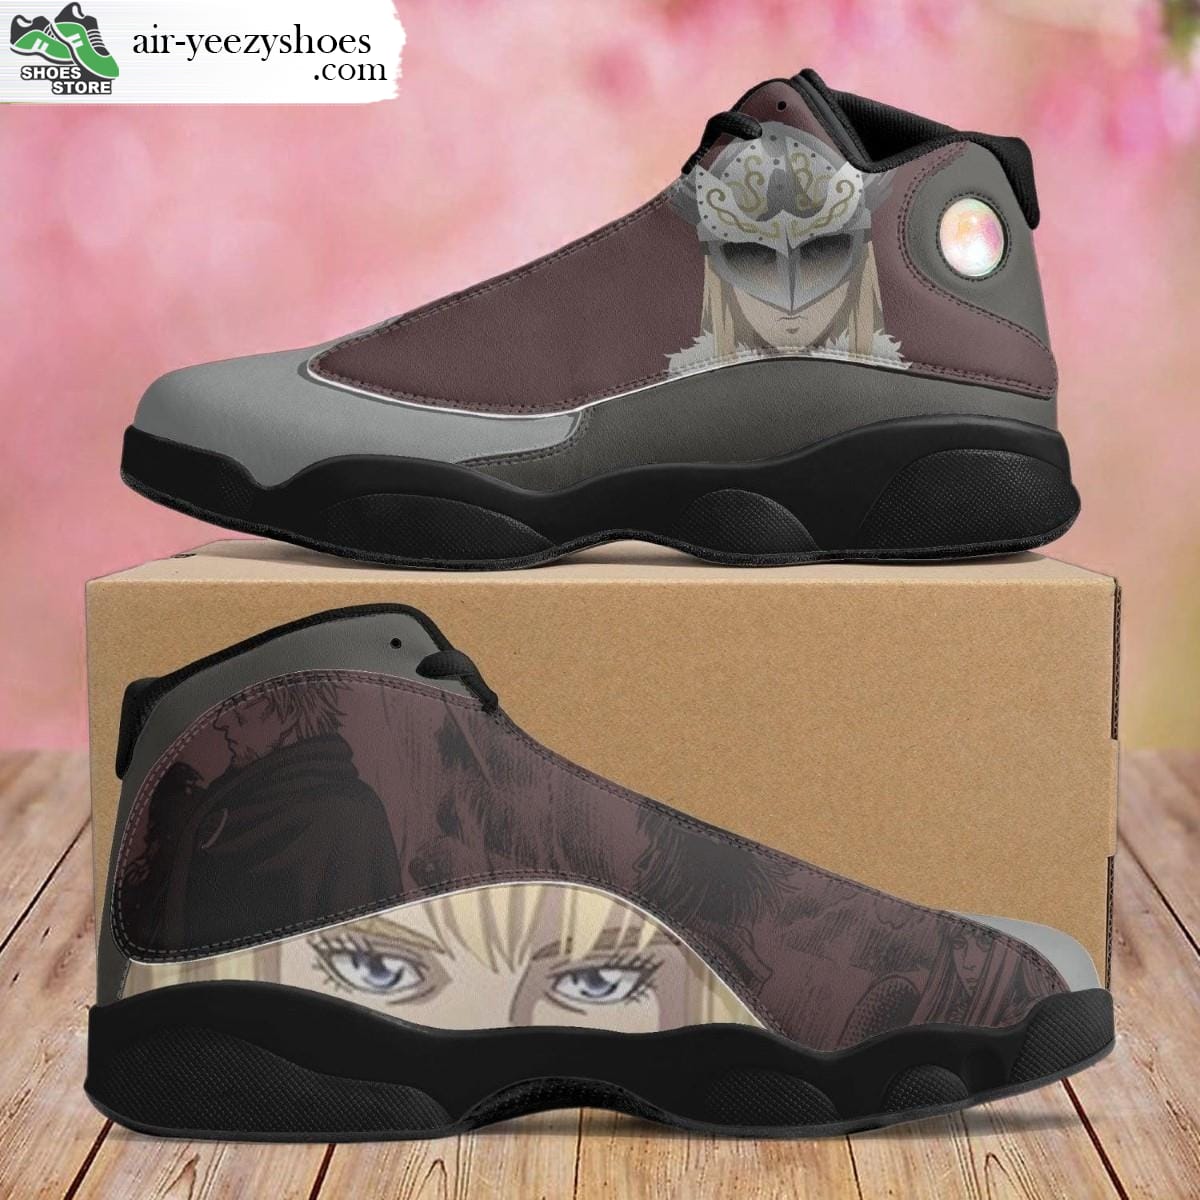 Canute Jordan 13 Shoes, Vinland Saga Gift